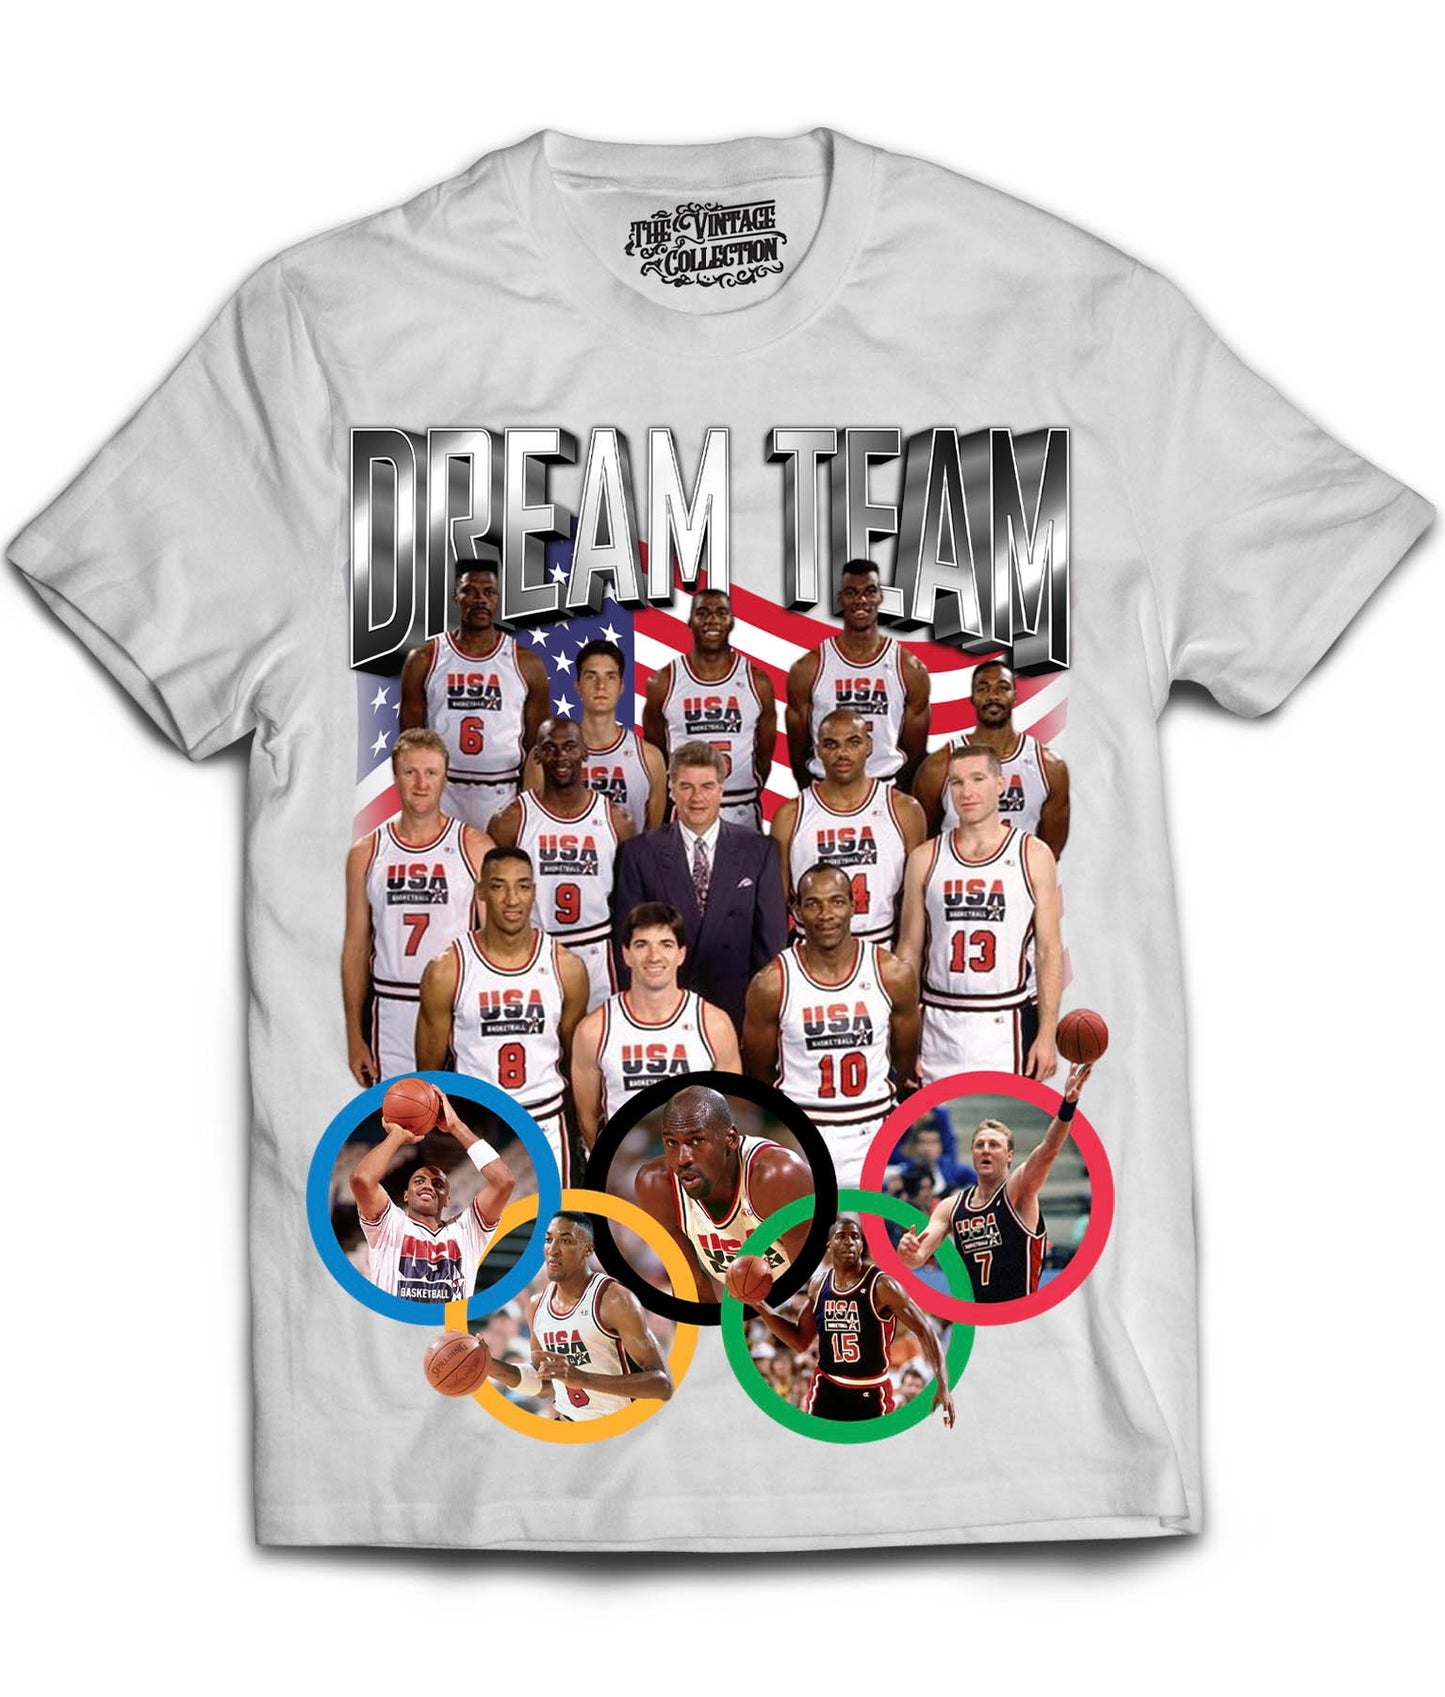 Dream Team Tribute T-Shirt (WHITE)